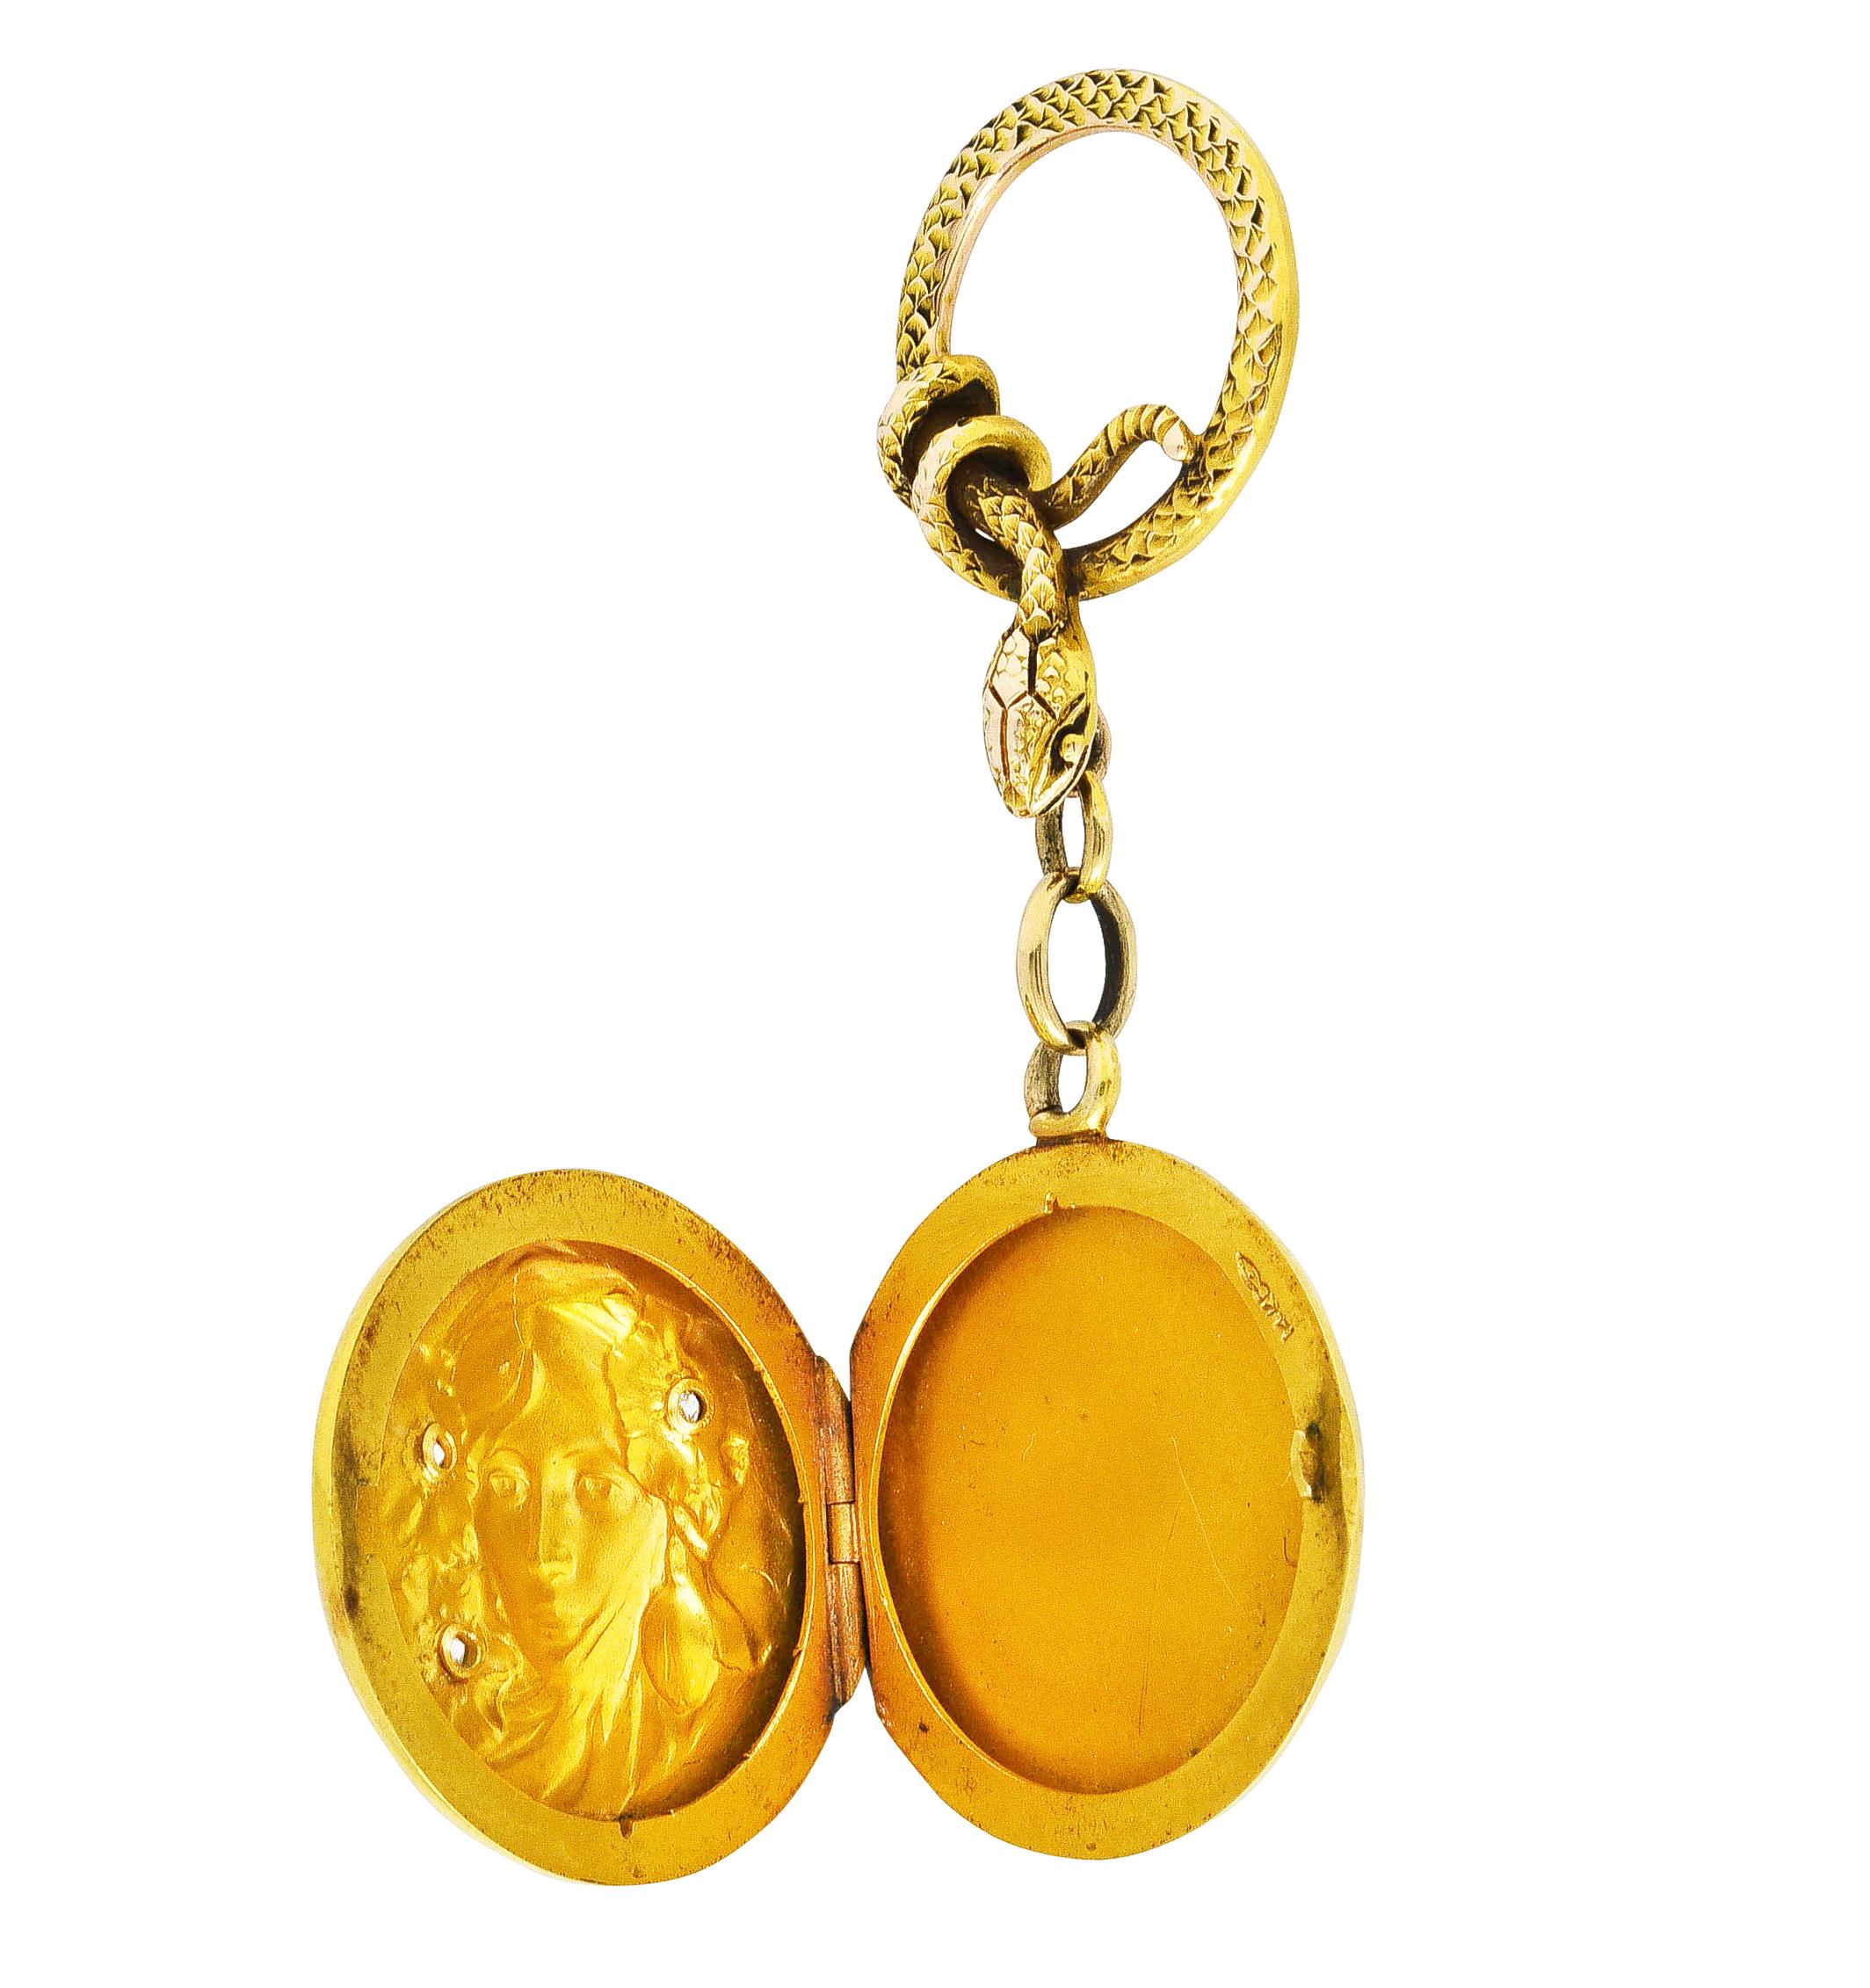 Shreve & Co. Art Nouveau Diamond 14 Karat Yellow Gold Snake Woman Antique Locket 1